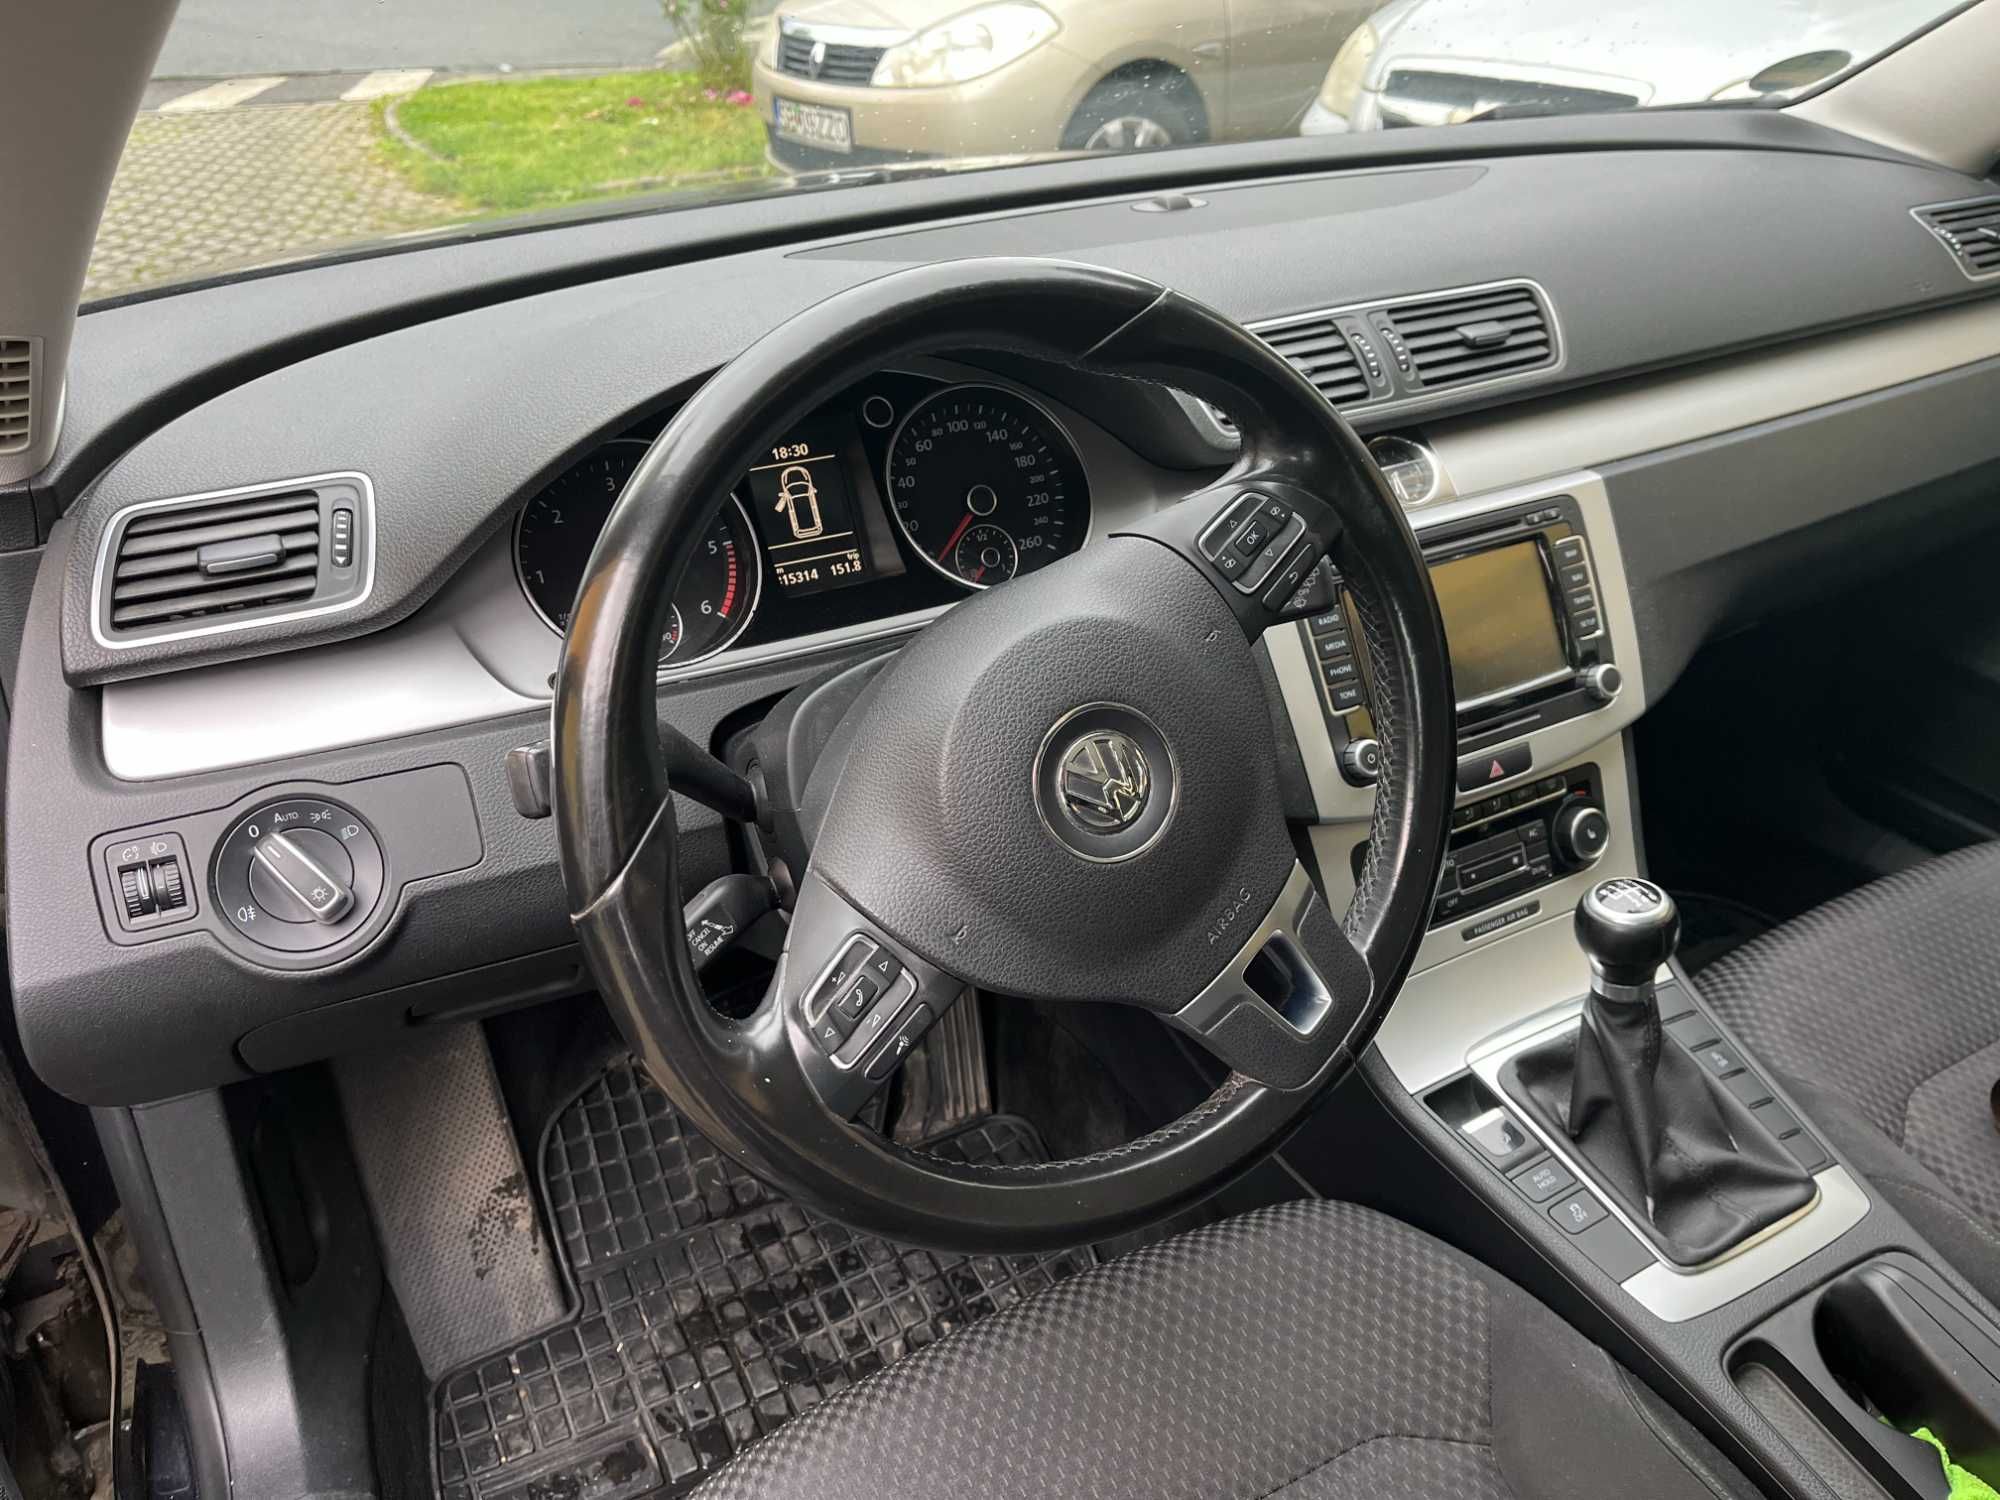 VW PASSAT B7, Trapa, camera, navigatie